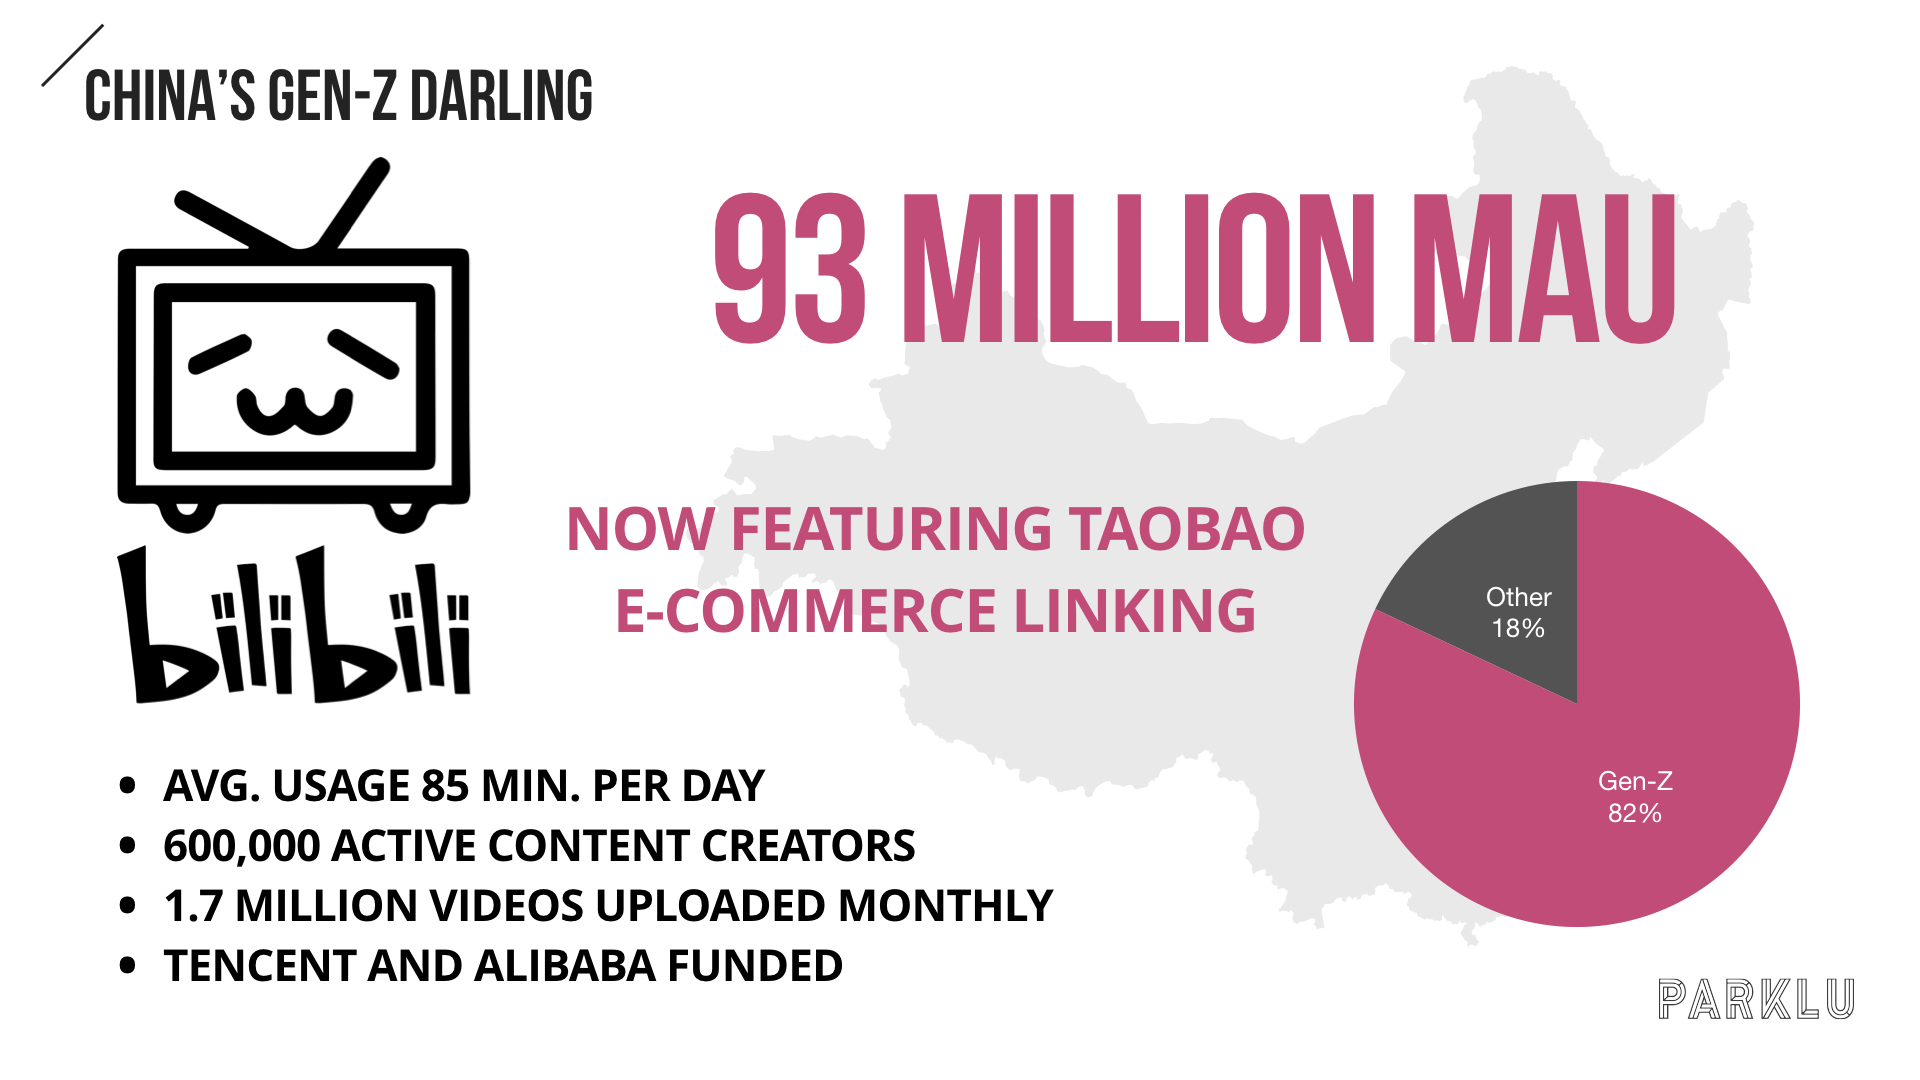 Taobao's e-commerce platform with Bilibili's content creators